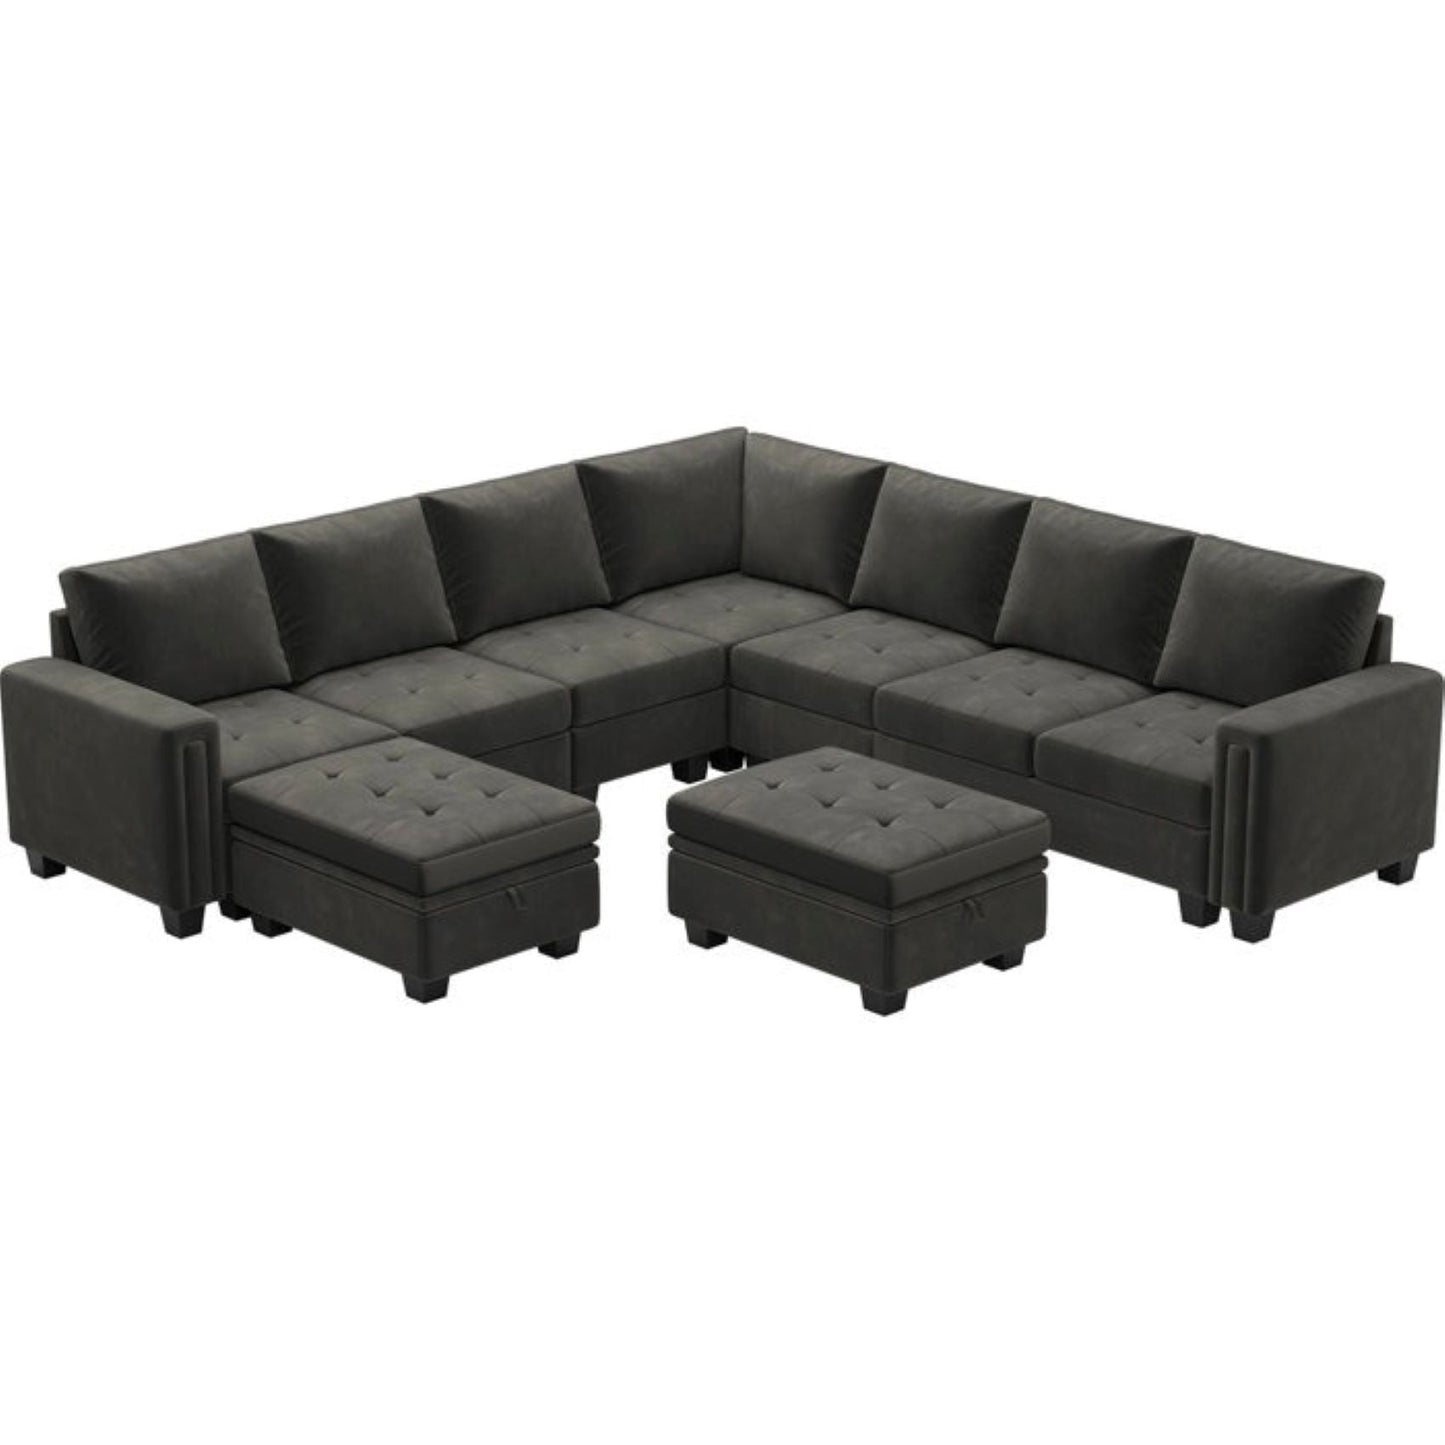 Moris 8 Seater Modular U Shape Fabric Sofa with Storage Ottoman For Living Room | Bedroom | Office - Torque India